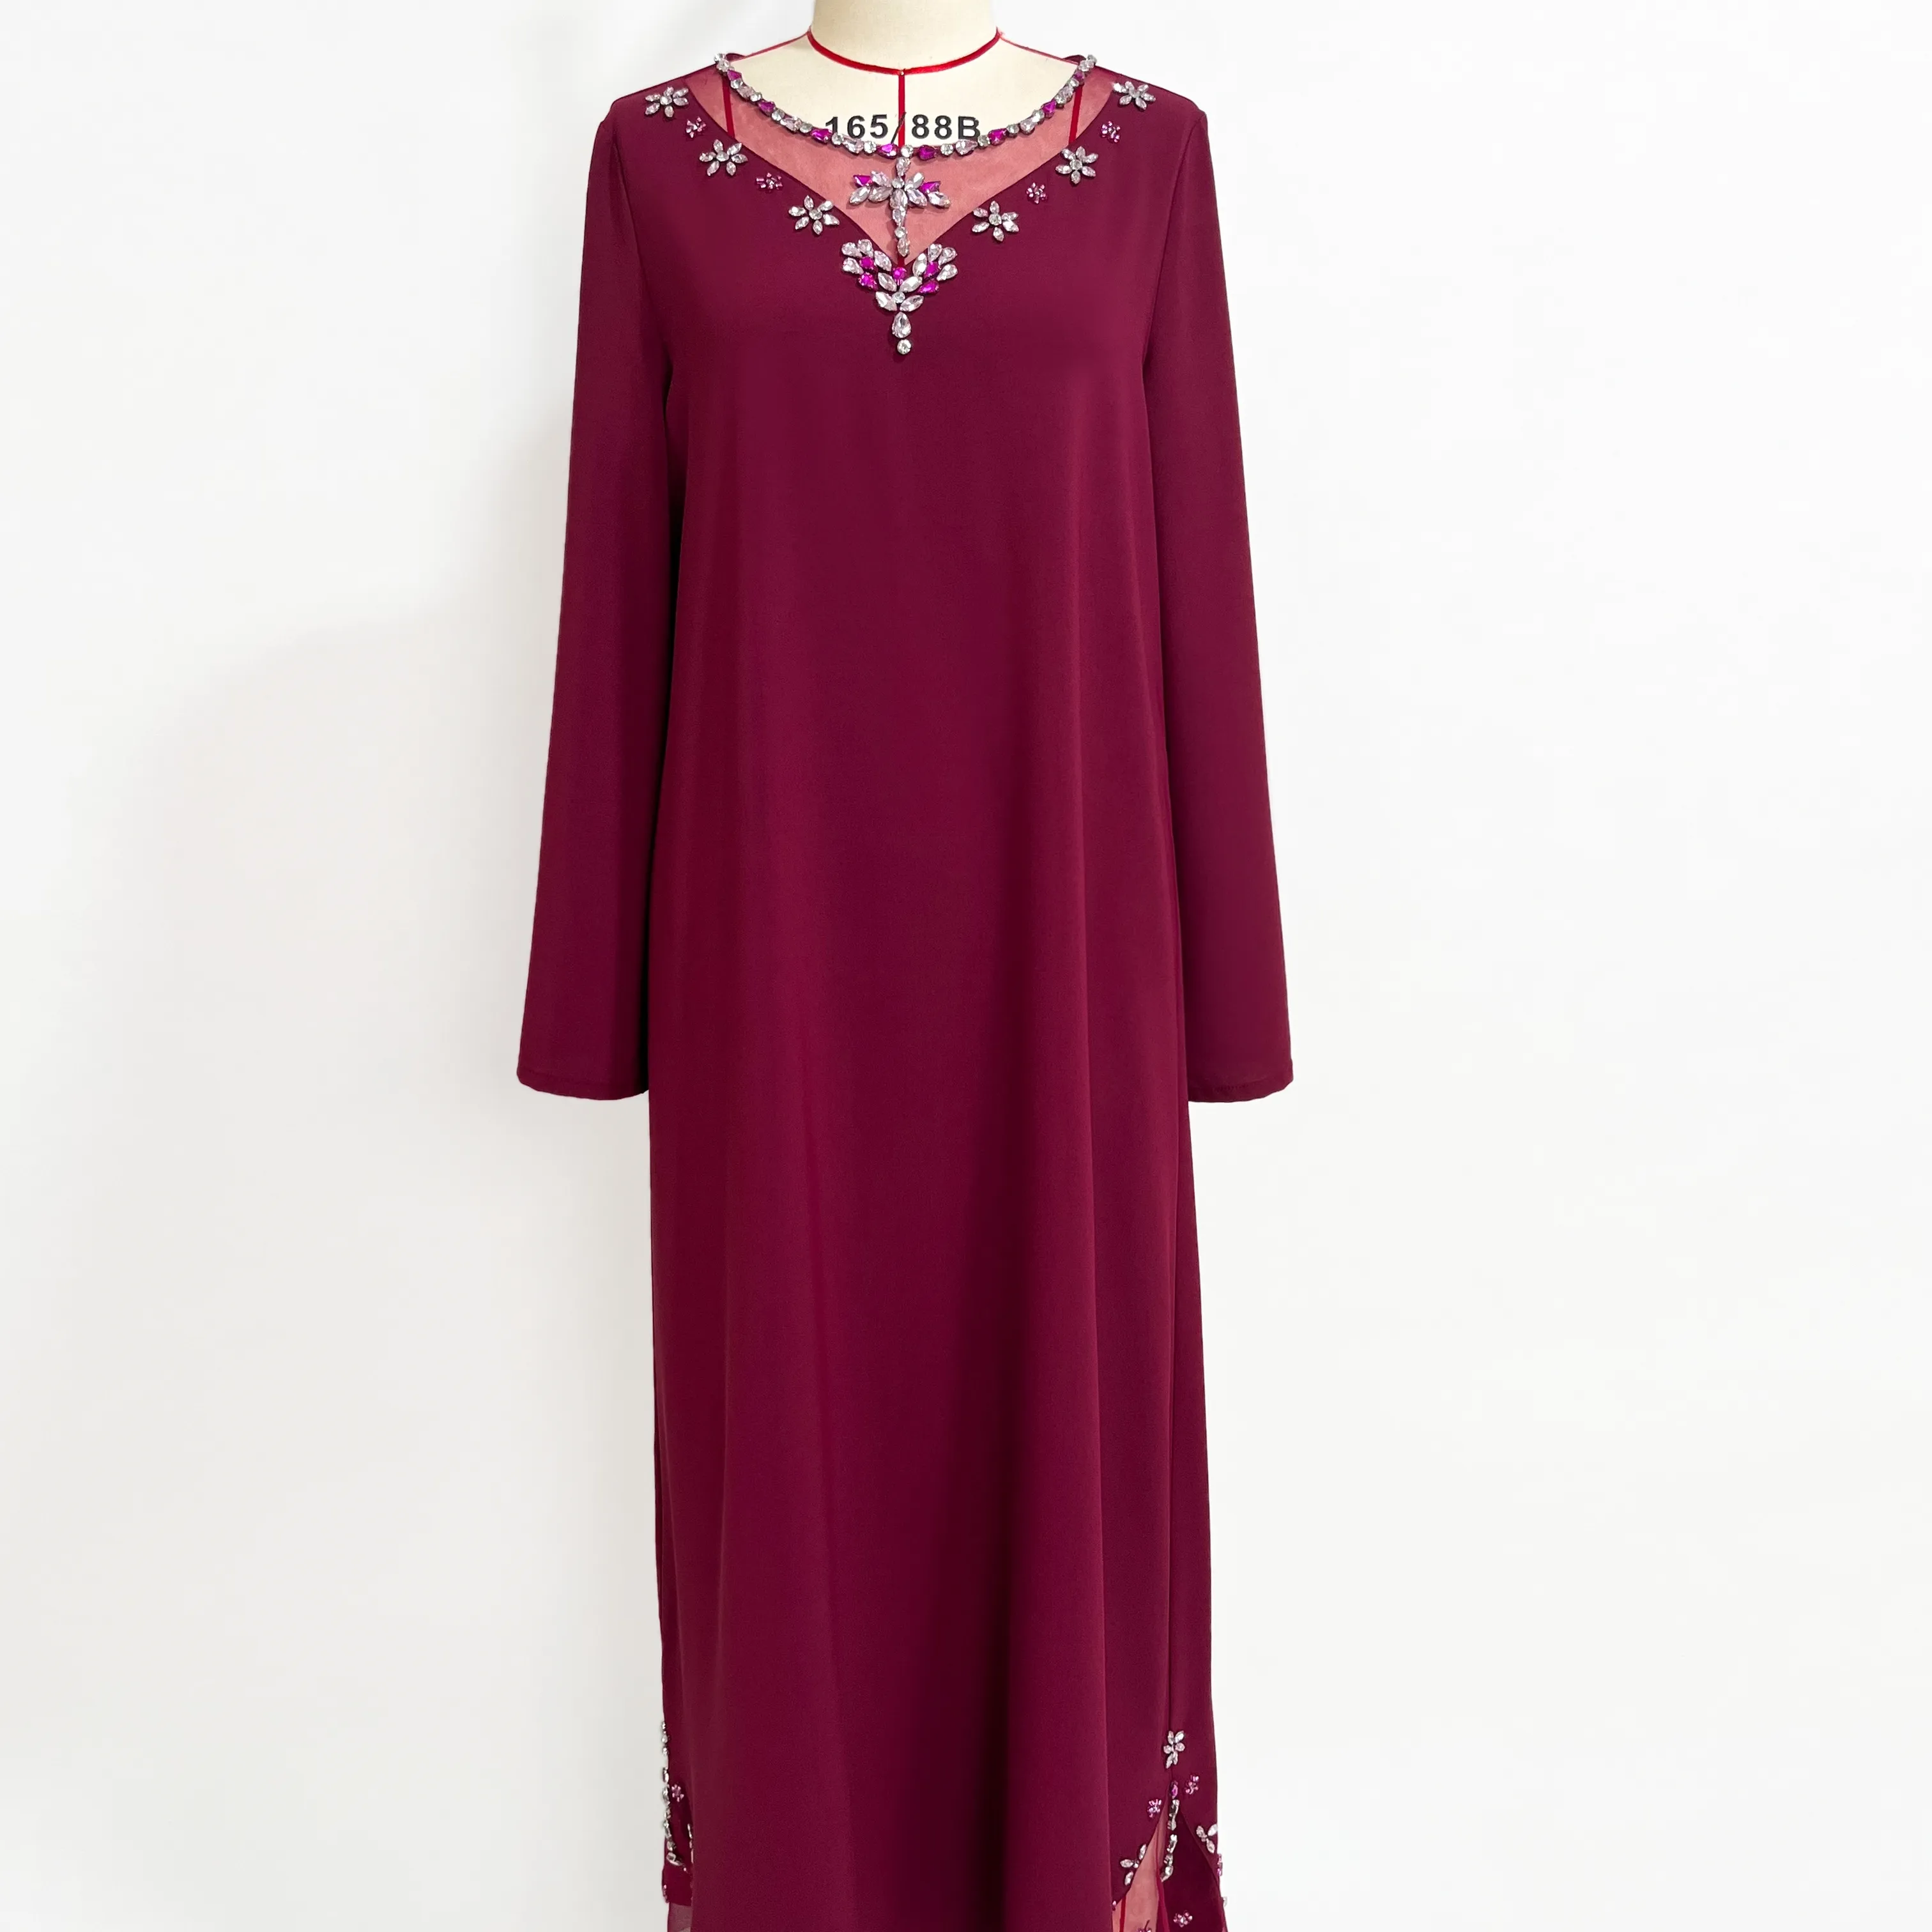 New Arrival Muslim Women's Clothing Pattern Print Casual Dress Islamic Pleated Long Sleeve Polyester Dress Kaftan Abaya